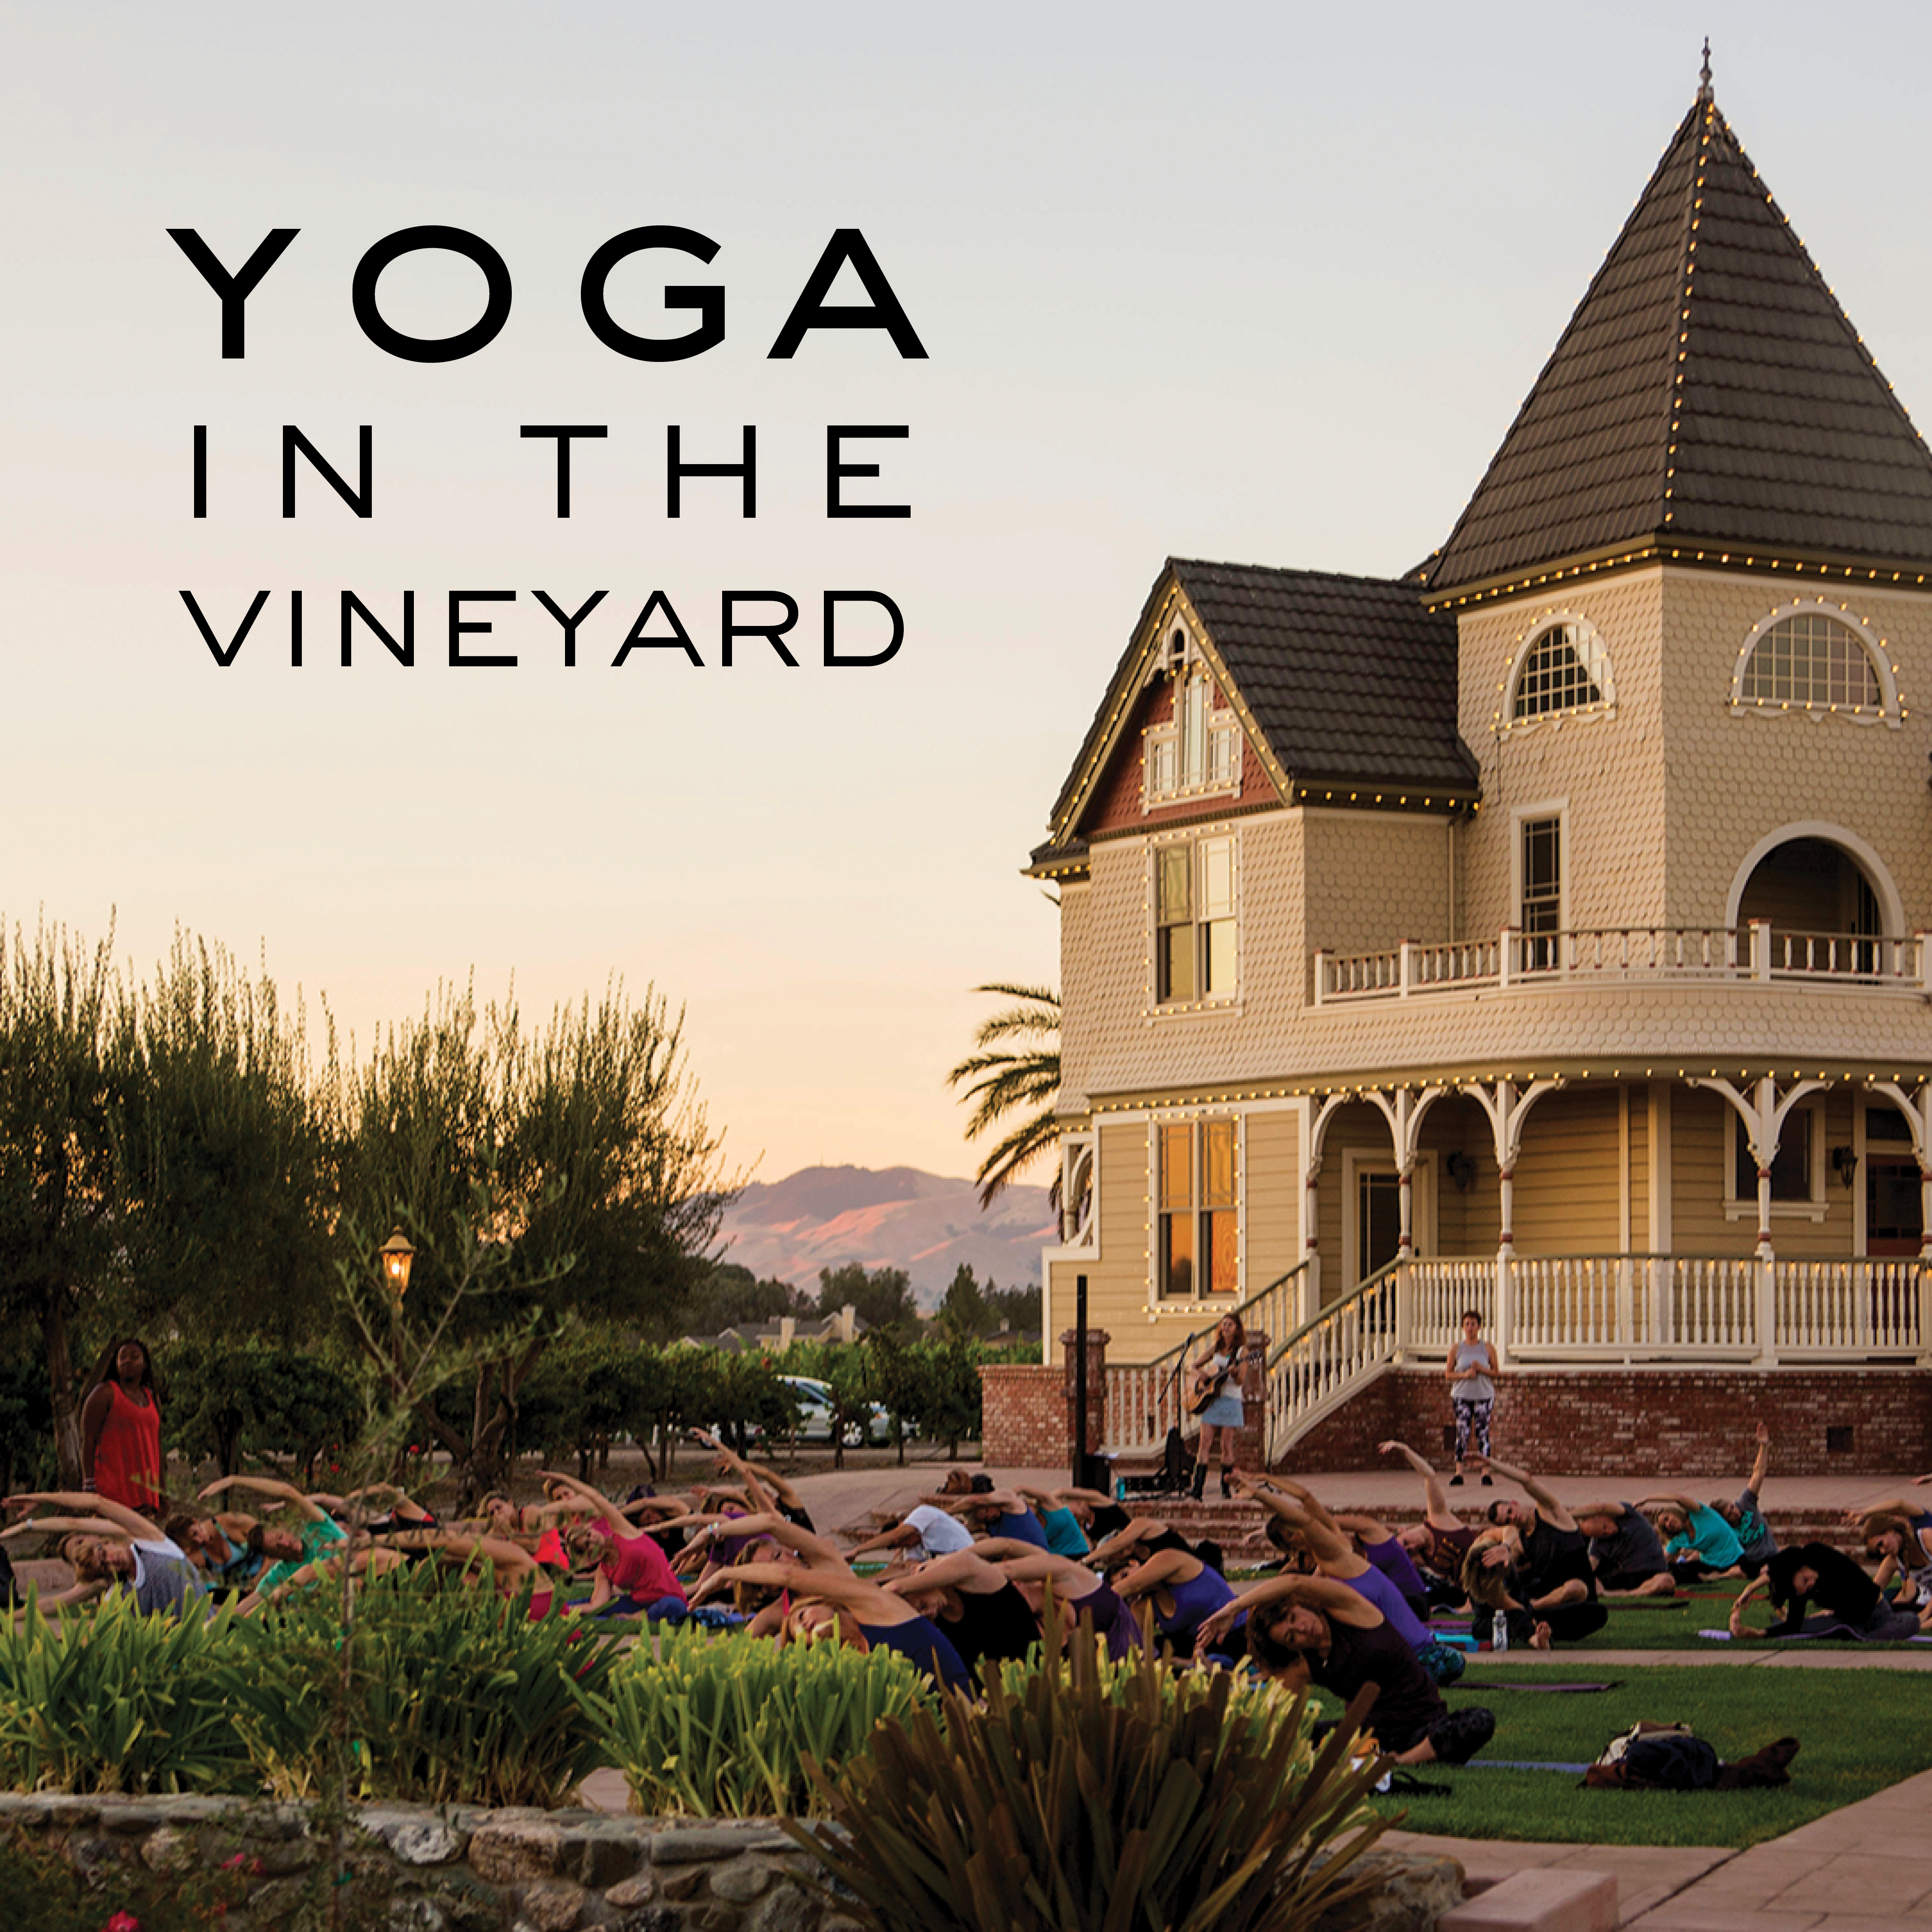 Yoga in the Vineyard